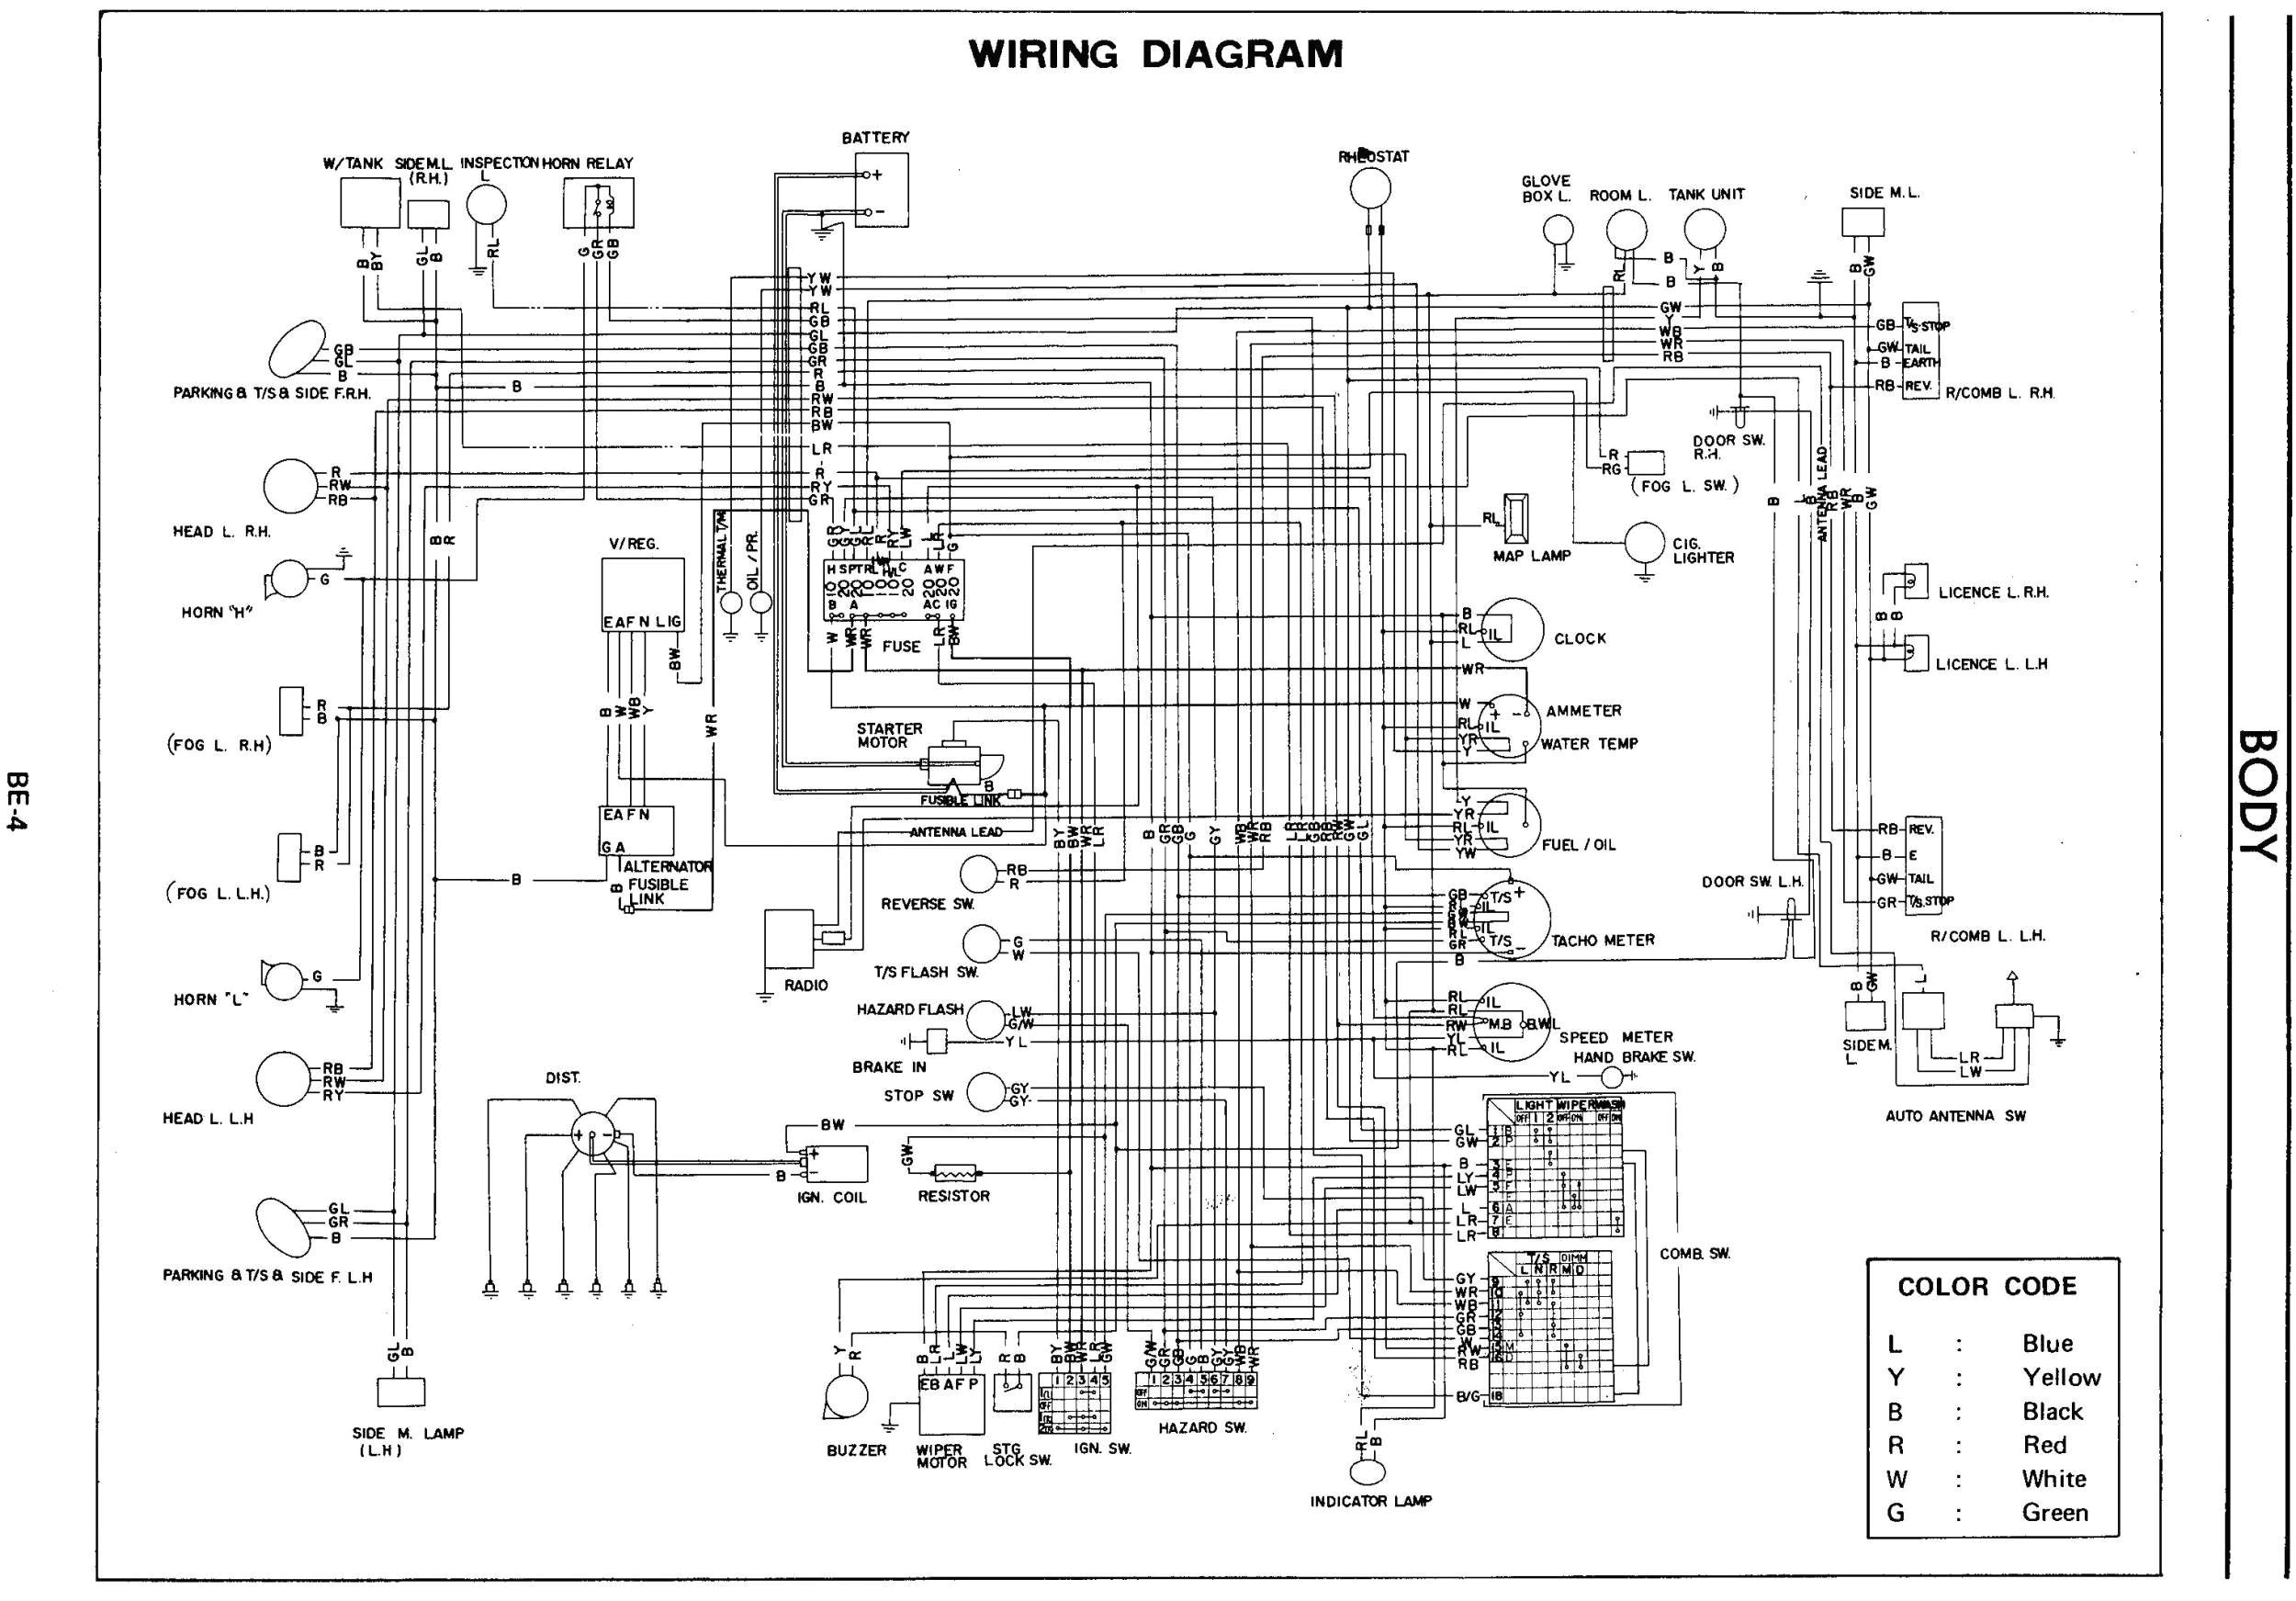 mercedes benz ac wiring diagram wiring diagram img mercedes benz a class wiring diagram mercedes ac